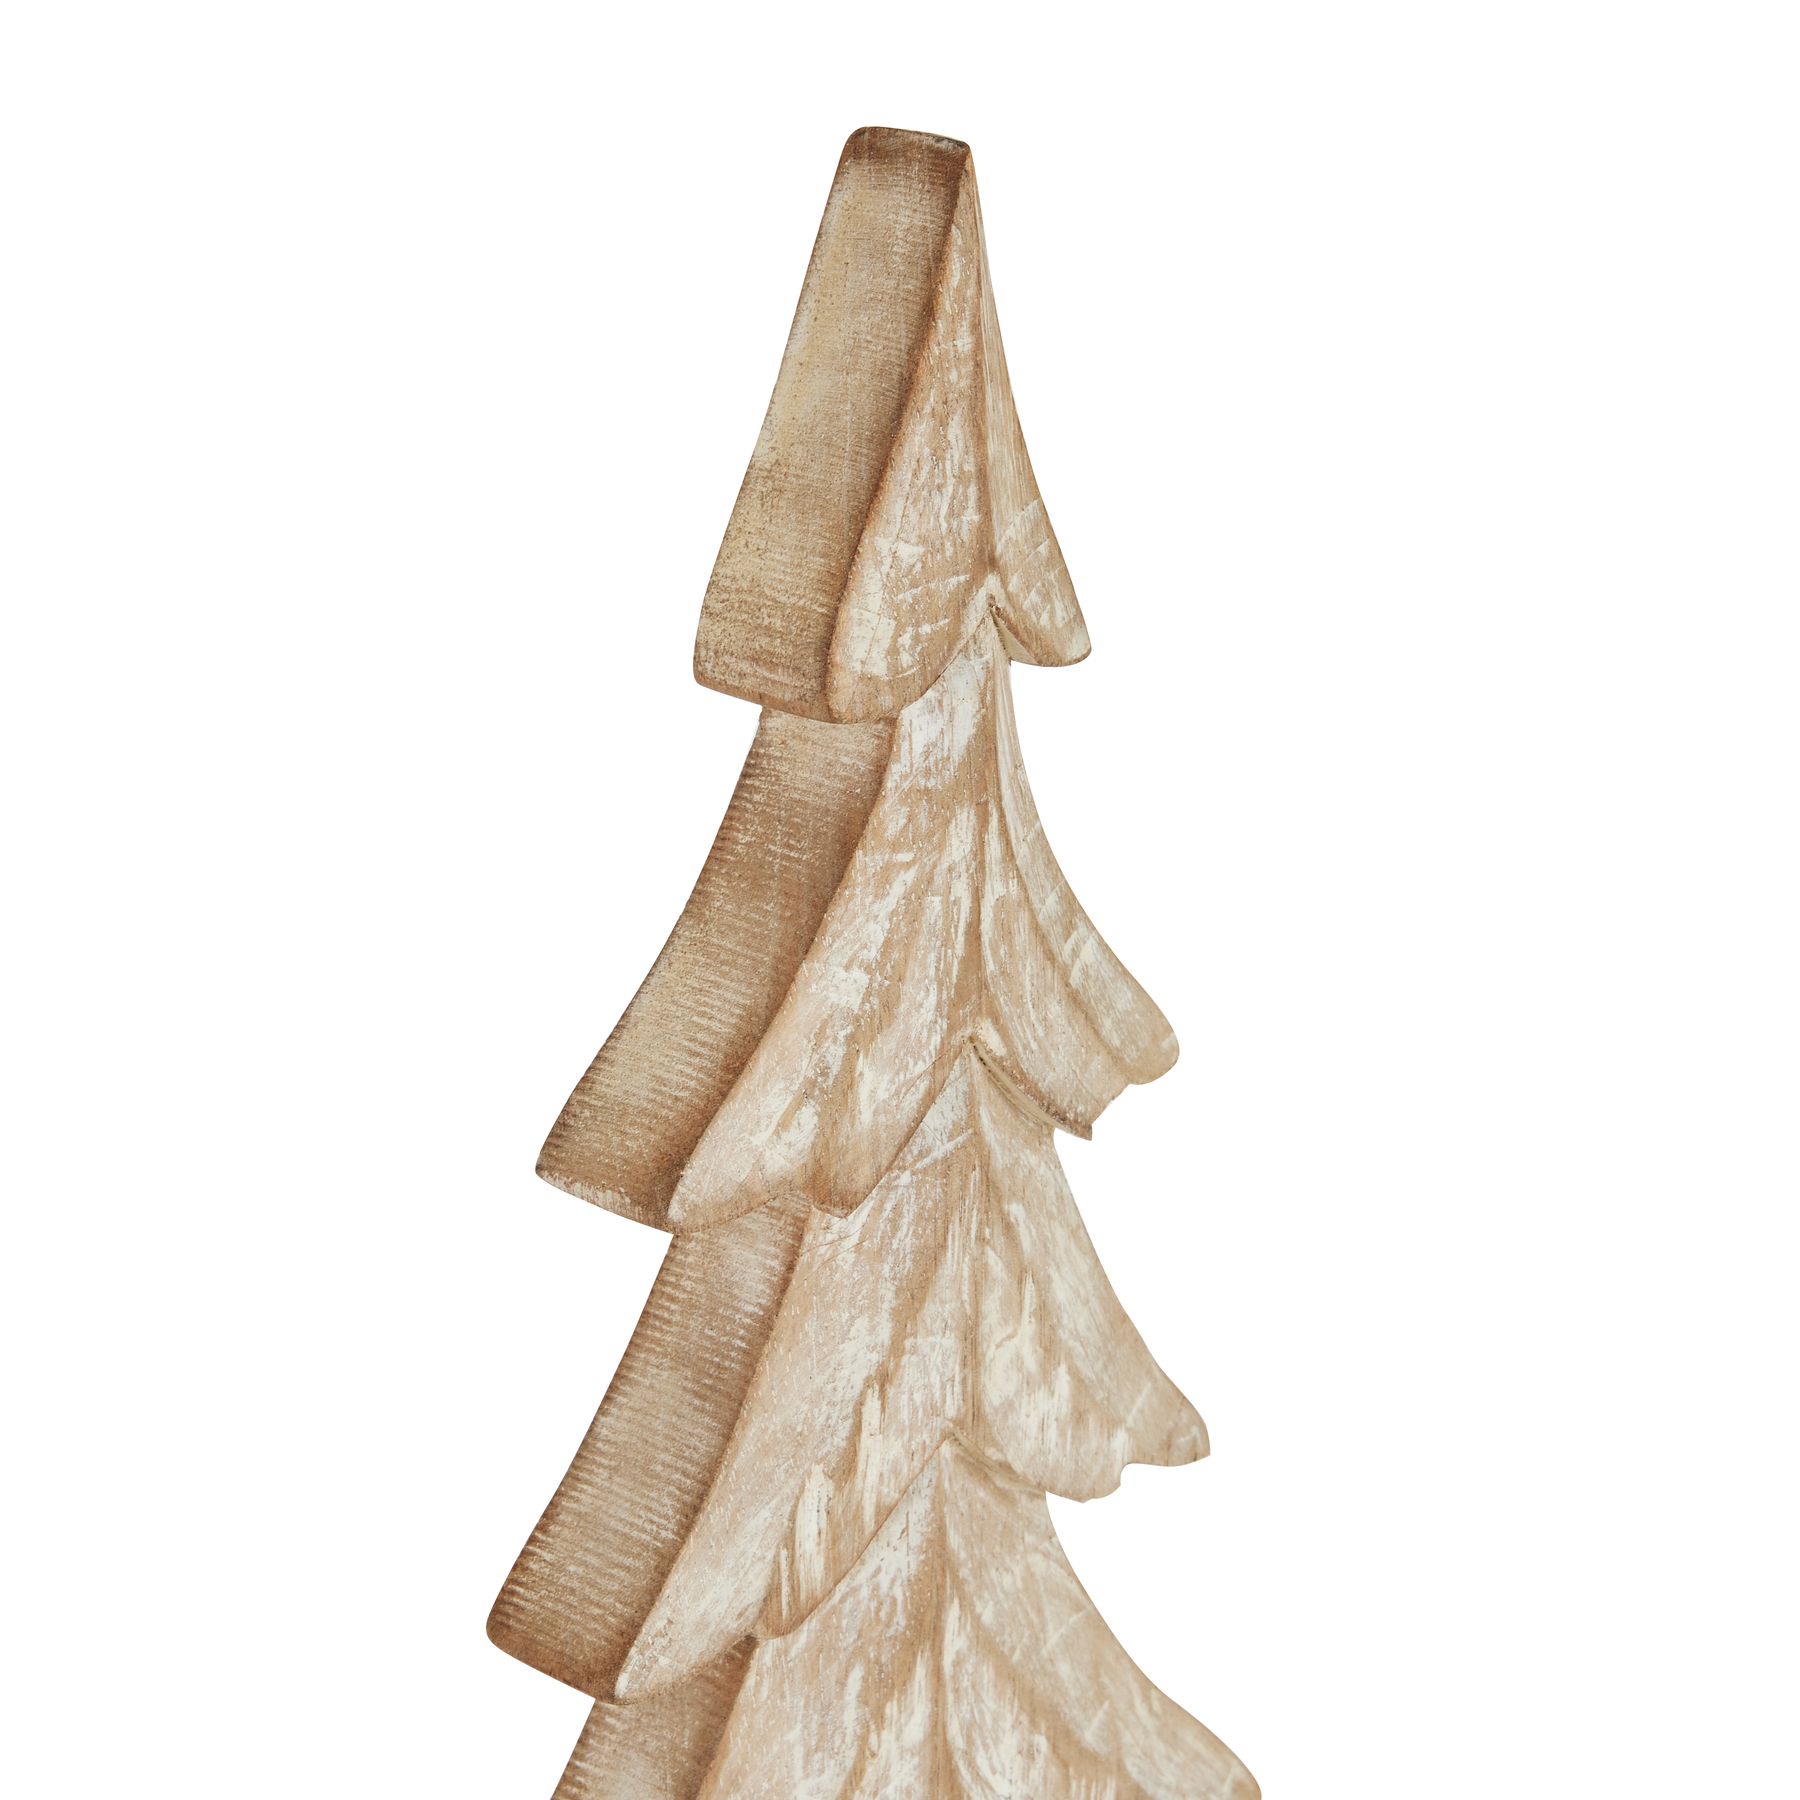 Carved Wood Large Christmas Tree - Image 3